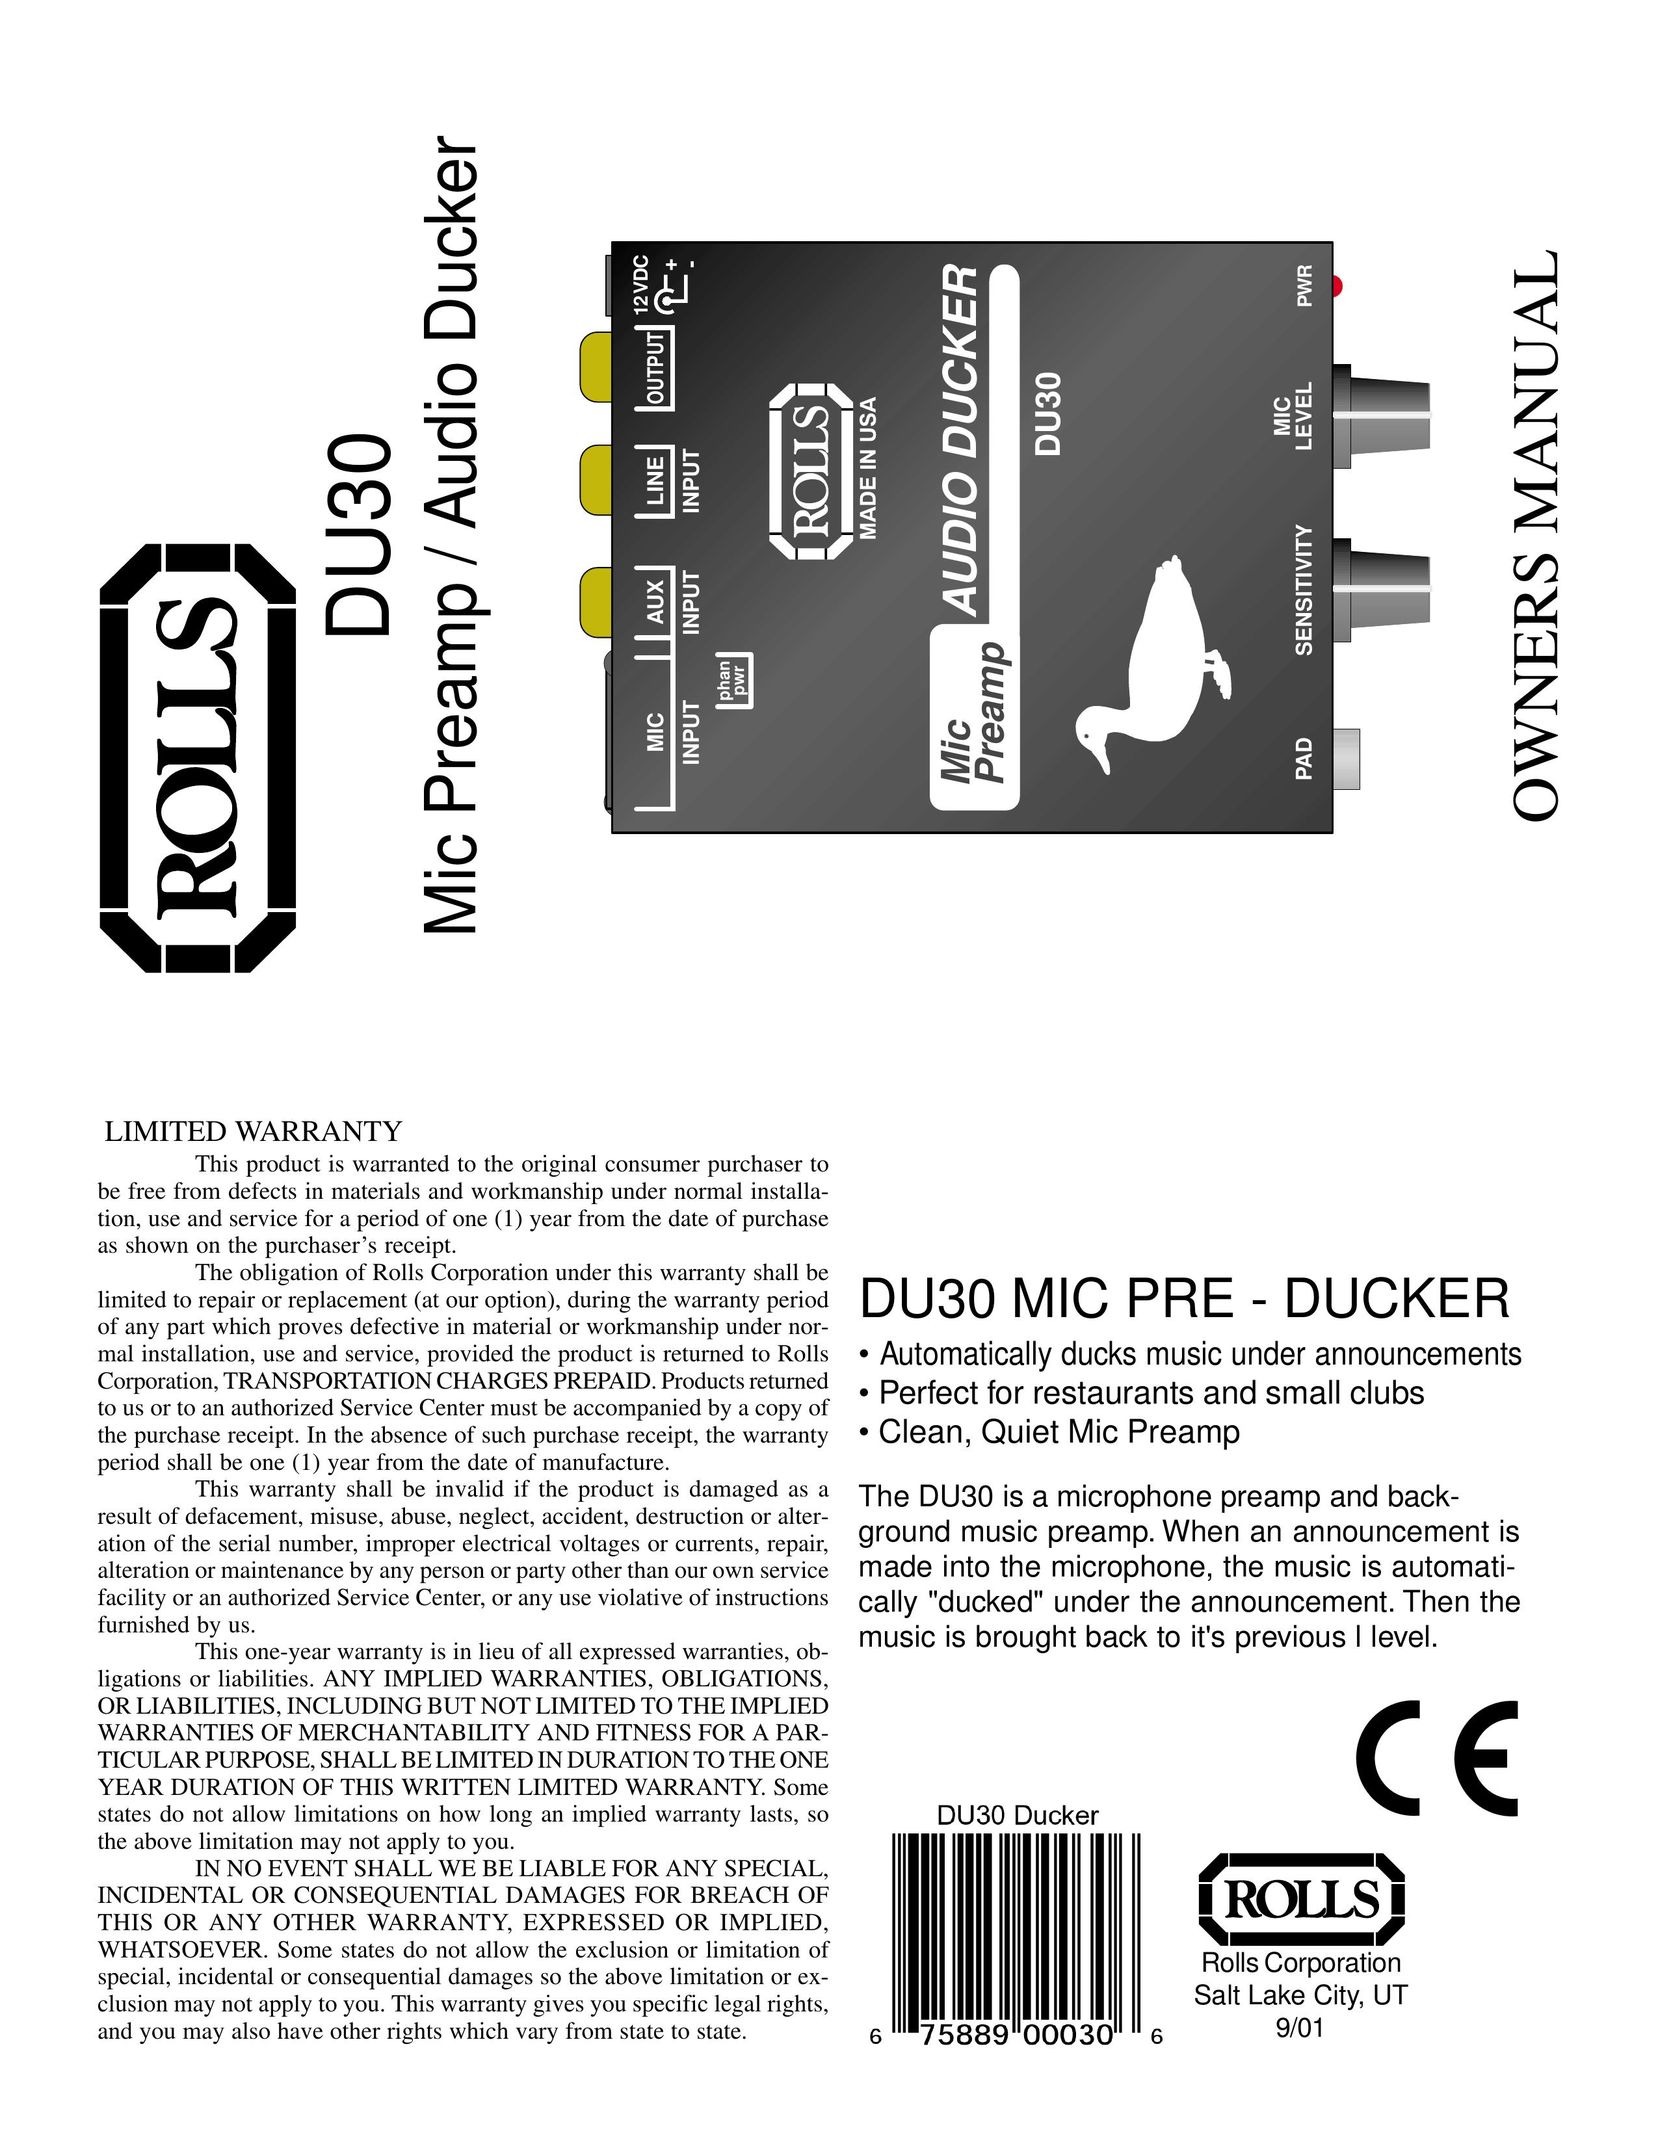 Rolls DU30 Car Amplifier User Manual